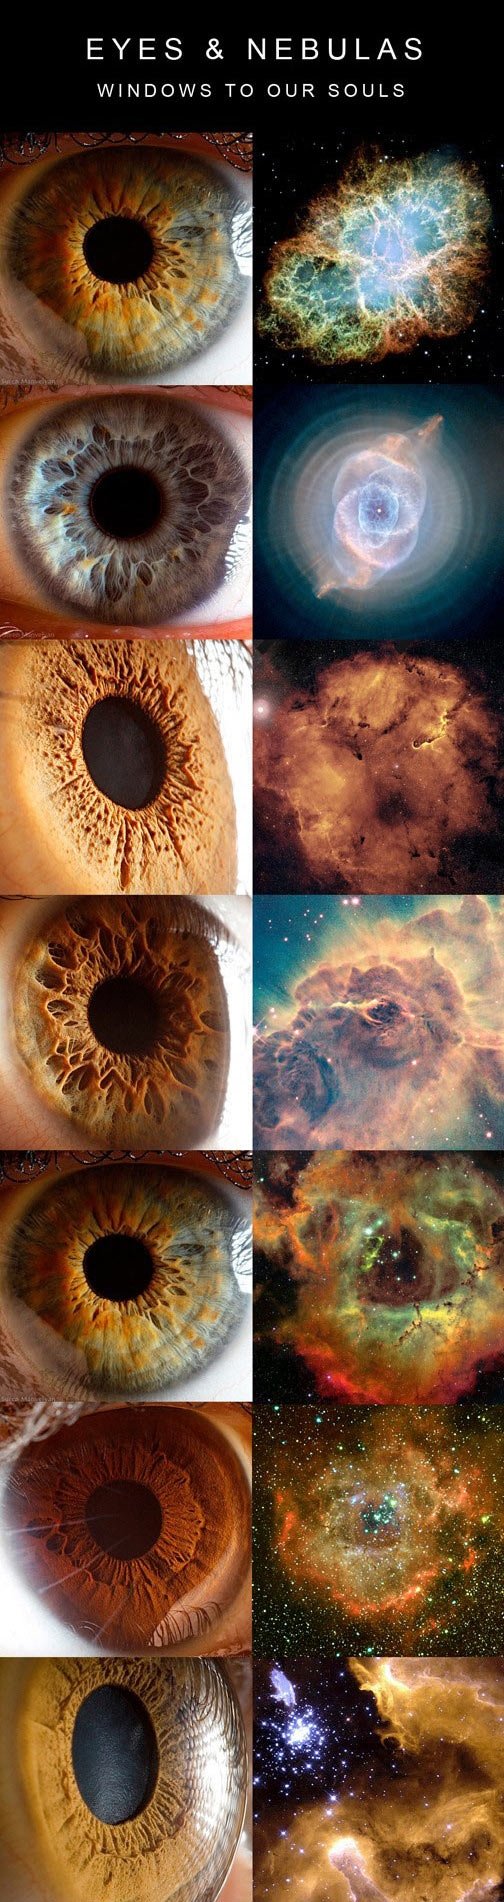 Eyes and Nebulas.